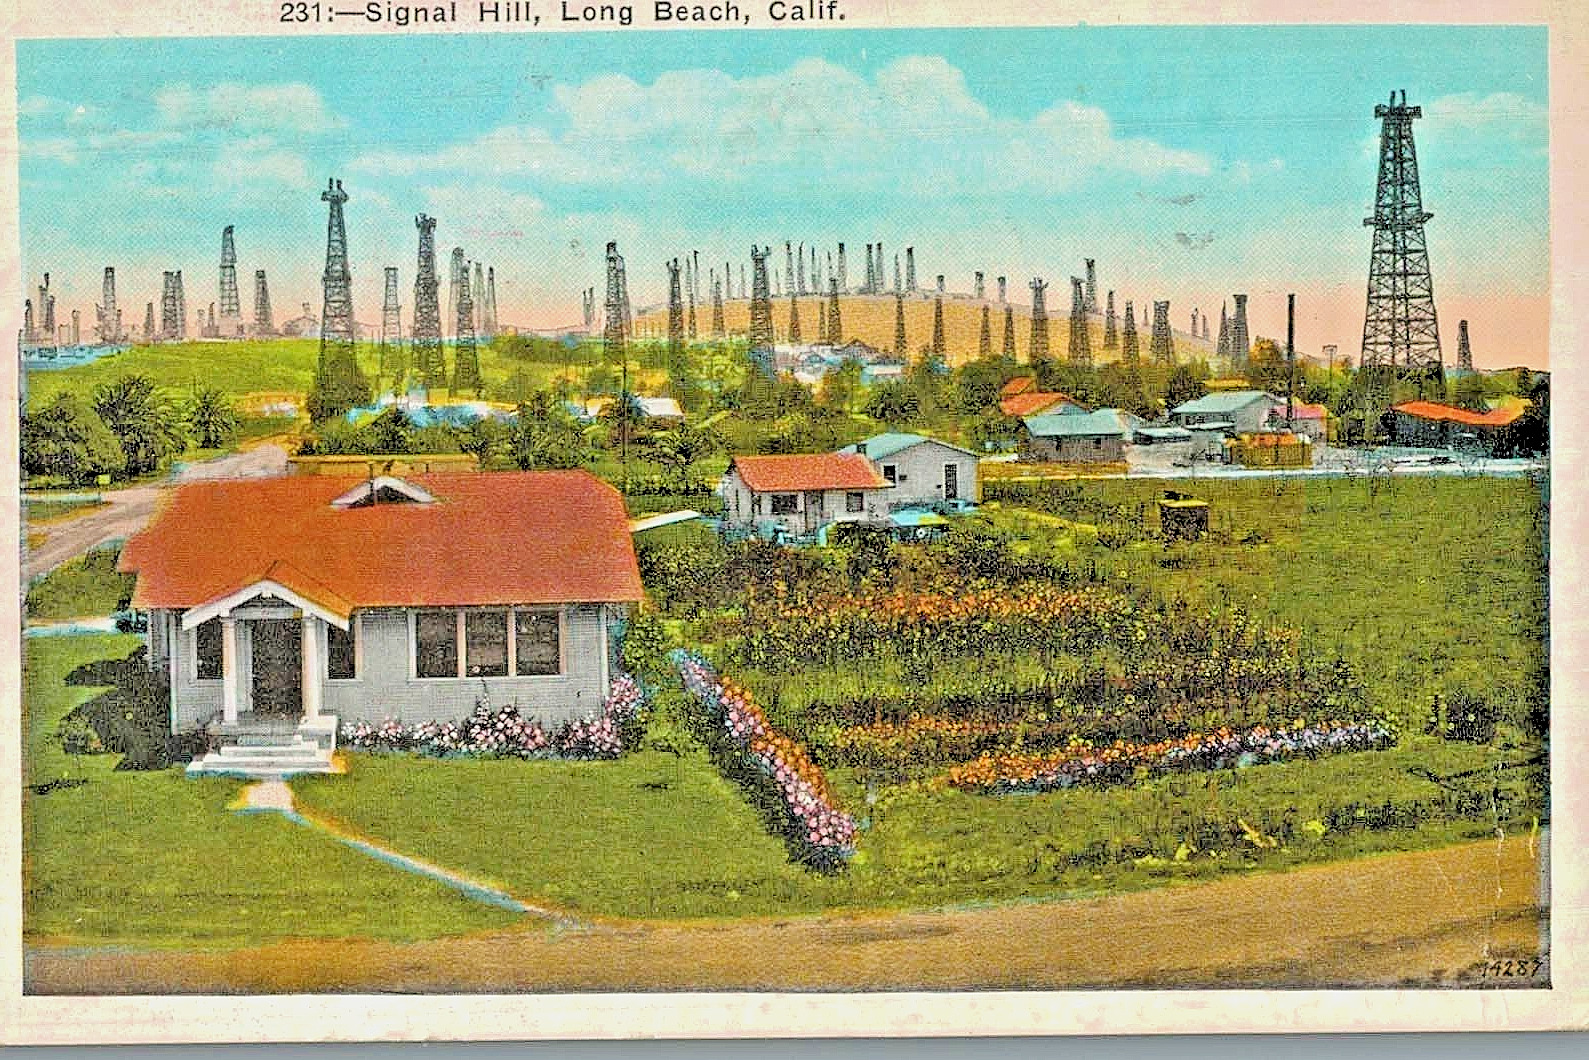 VIntage Postcard-231, Signal Hill, Long Beach, CA